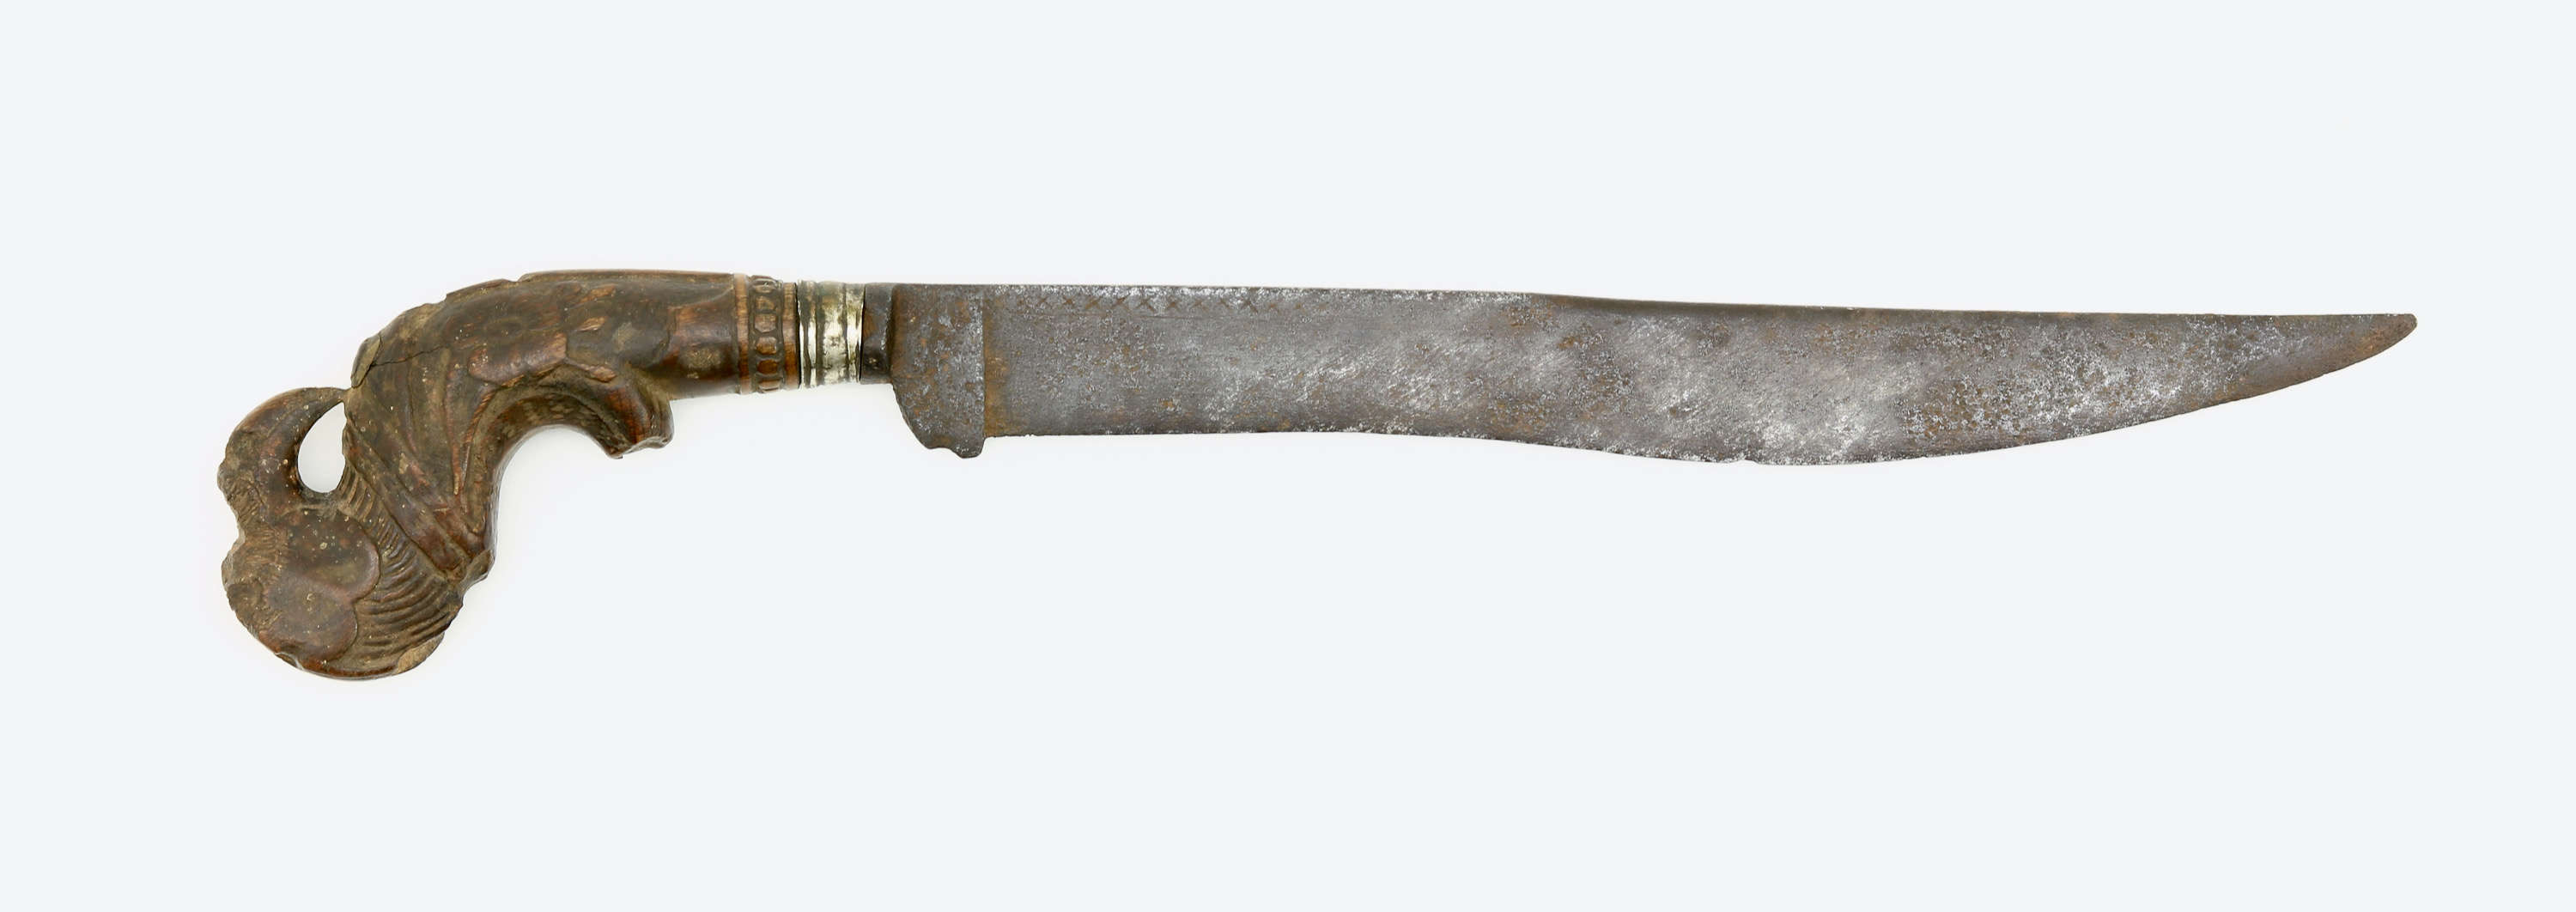 Sinhalese kirichchiya dagger